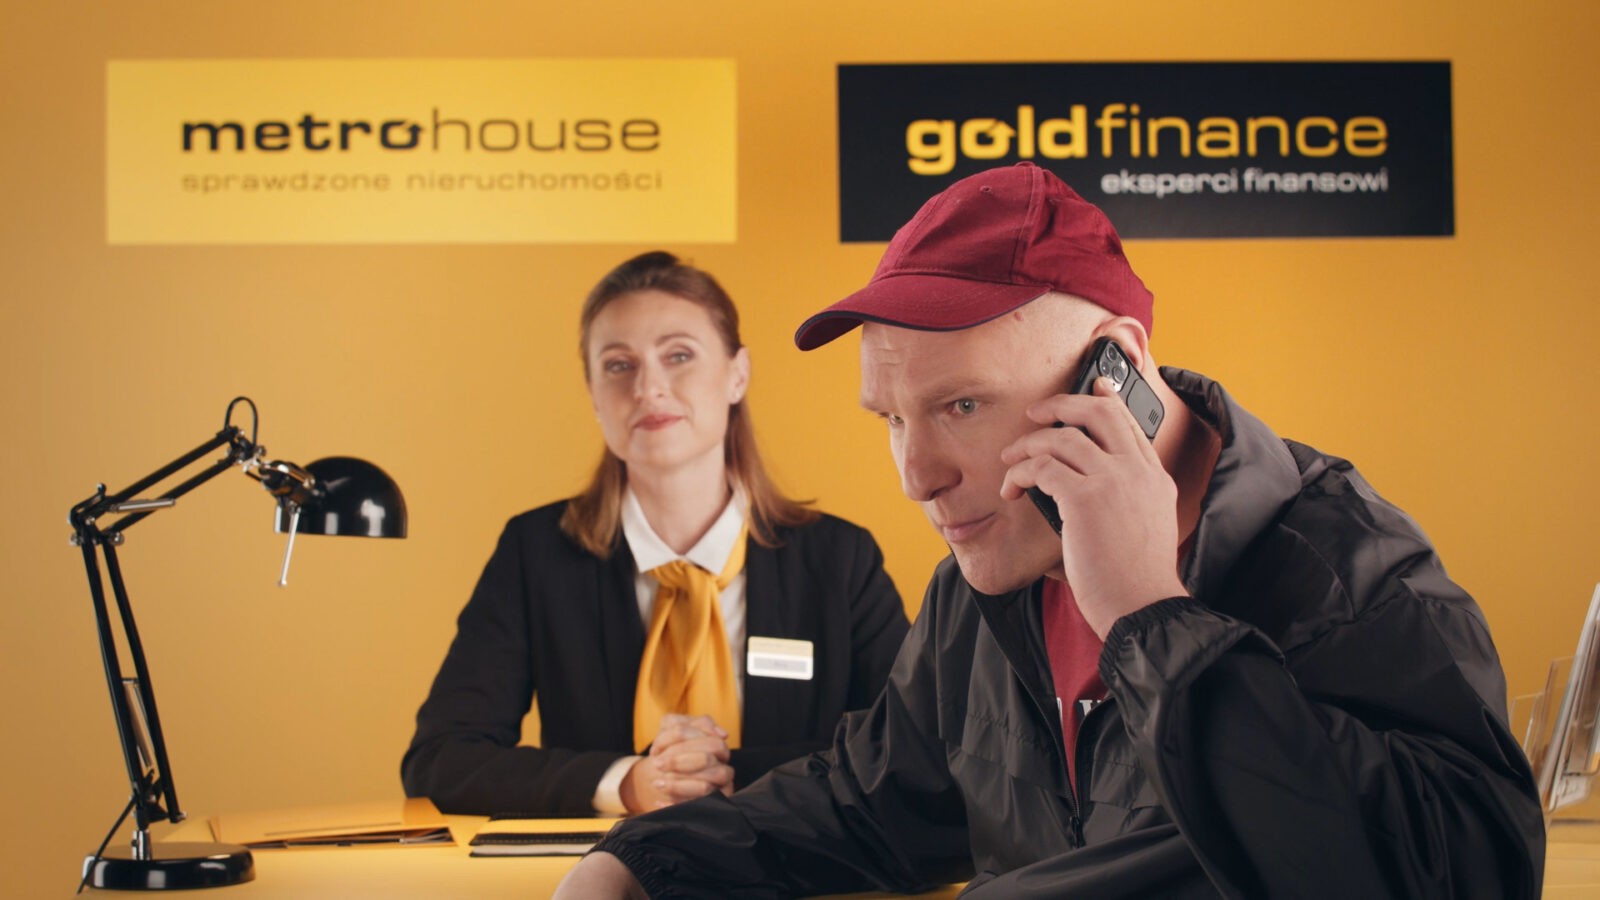 zabawna reklama dla metrohouse i gold finance - kadr